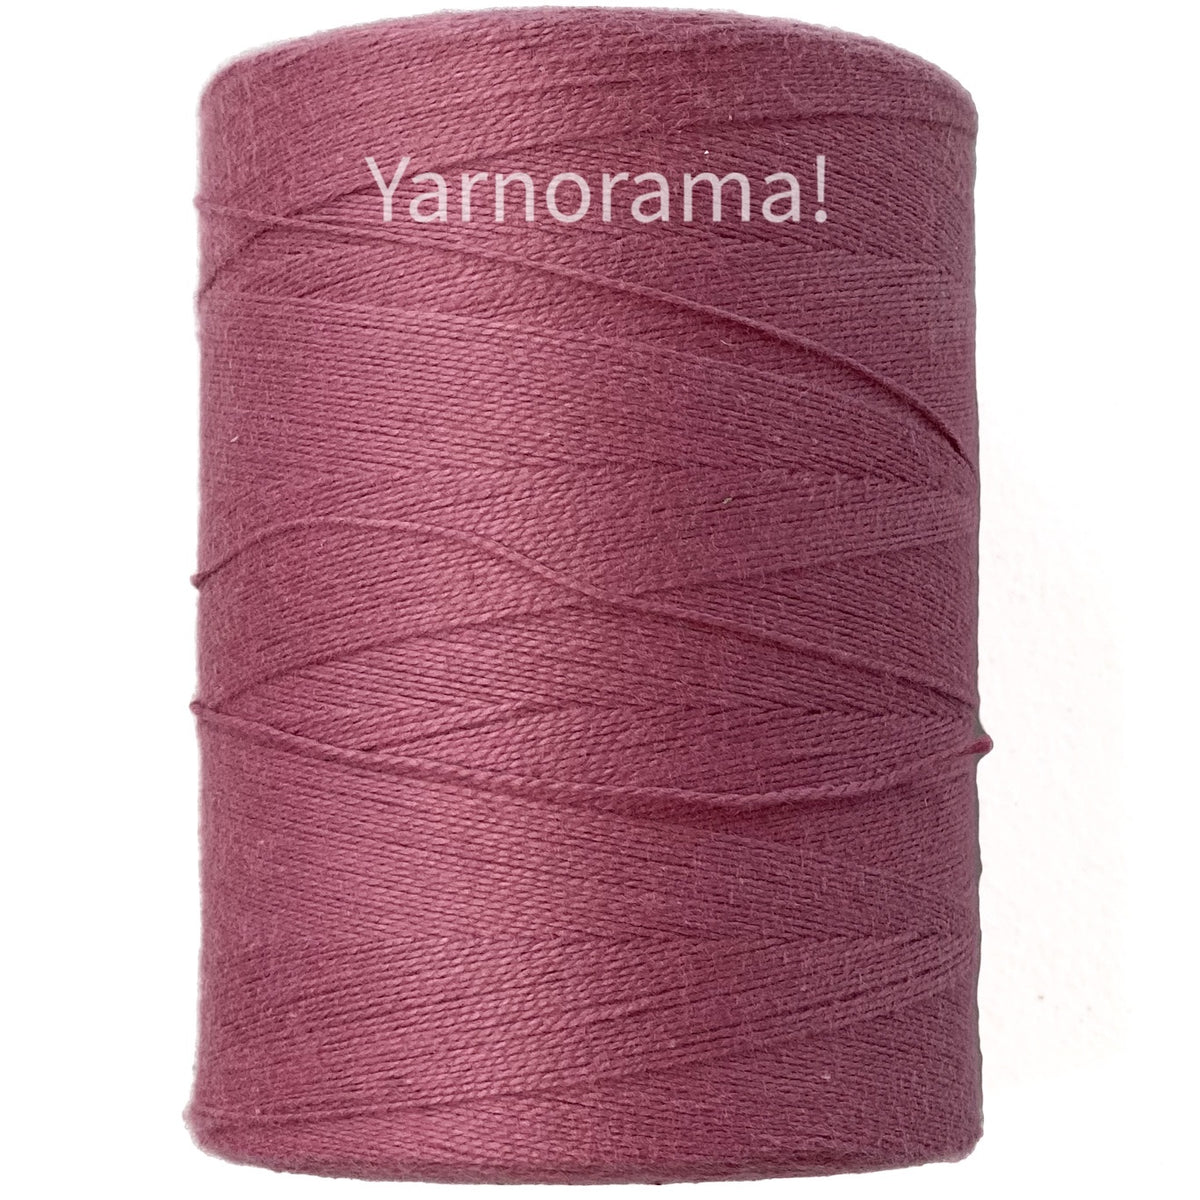 8/4 Unmercerized Cotton - Maurice Brassard-Weaving Yarn-Bordeaux - 1770-Yarnorama